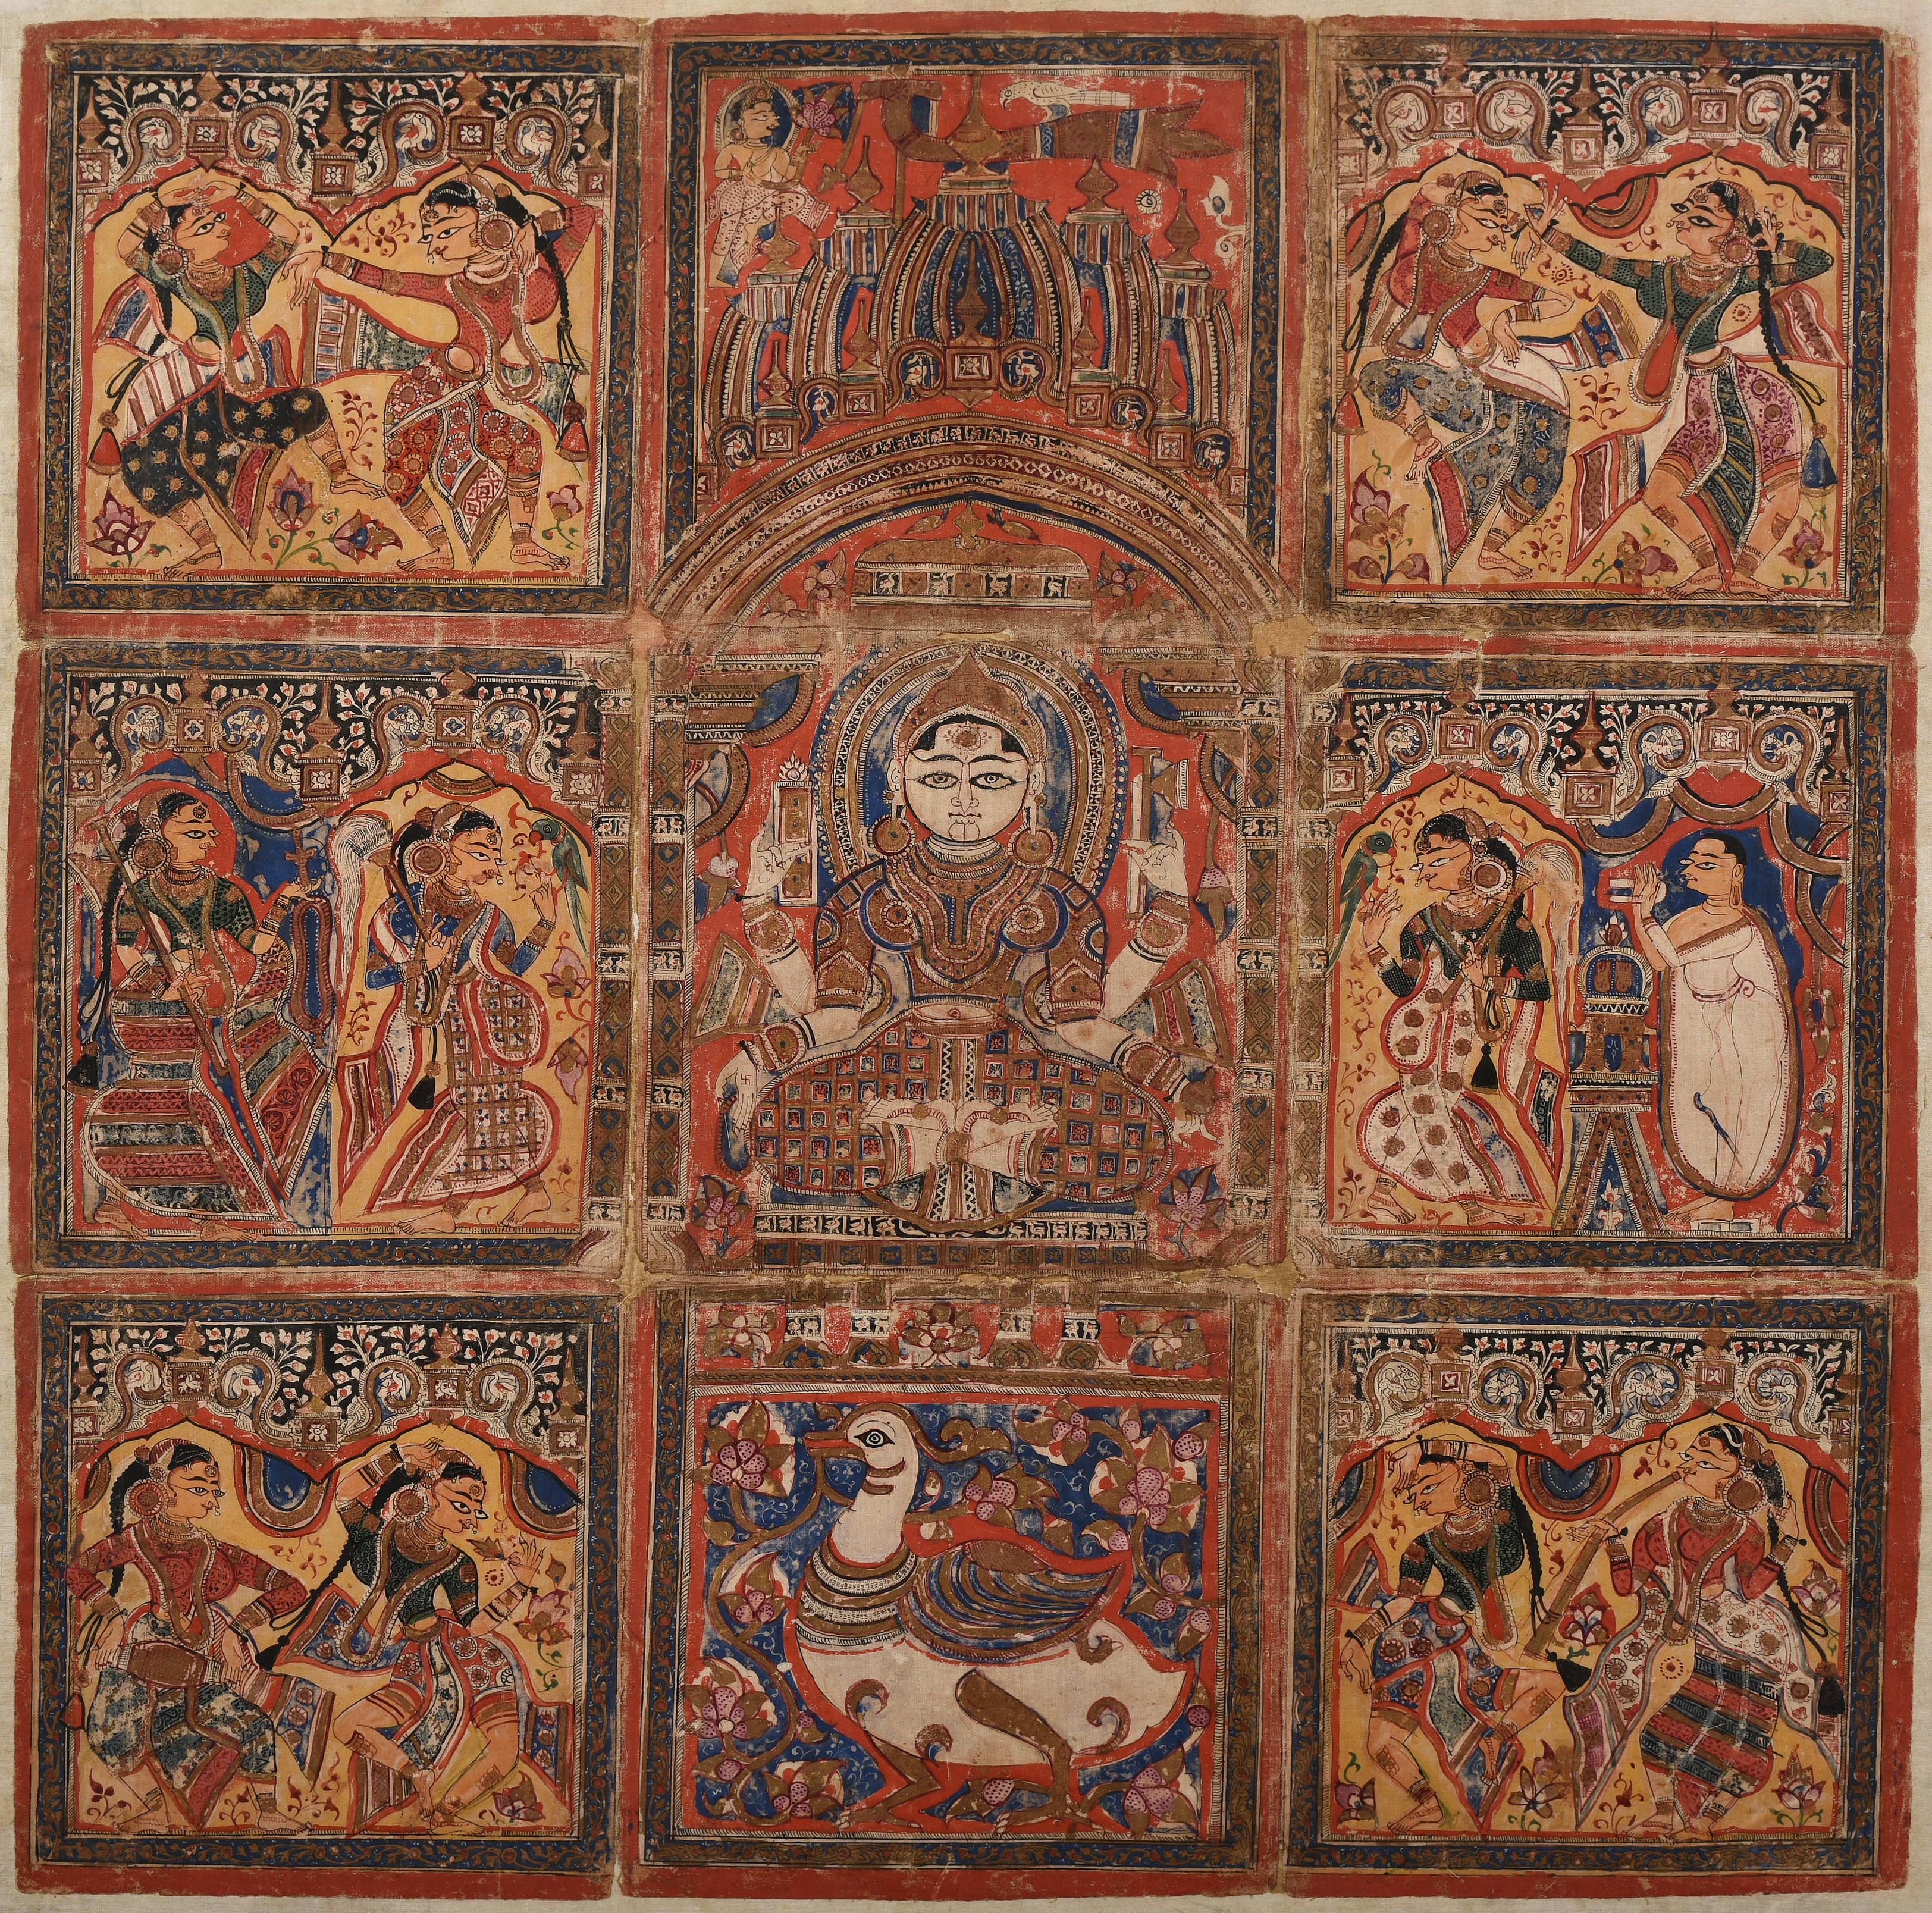 Saraswati Pata by Unknown Artist - c. 1475-1500 - 54.8 x 44.5 cm National Museum of New Delhi, India